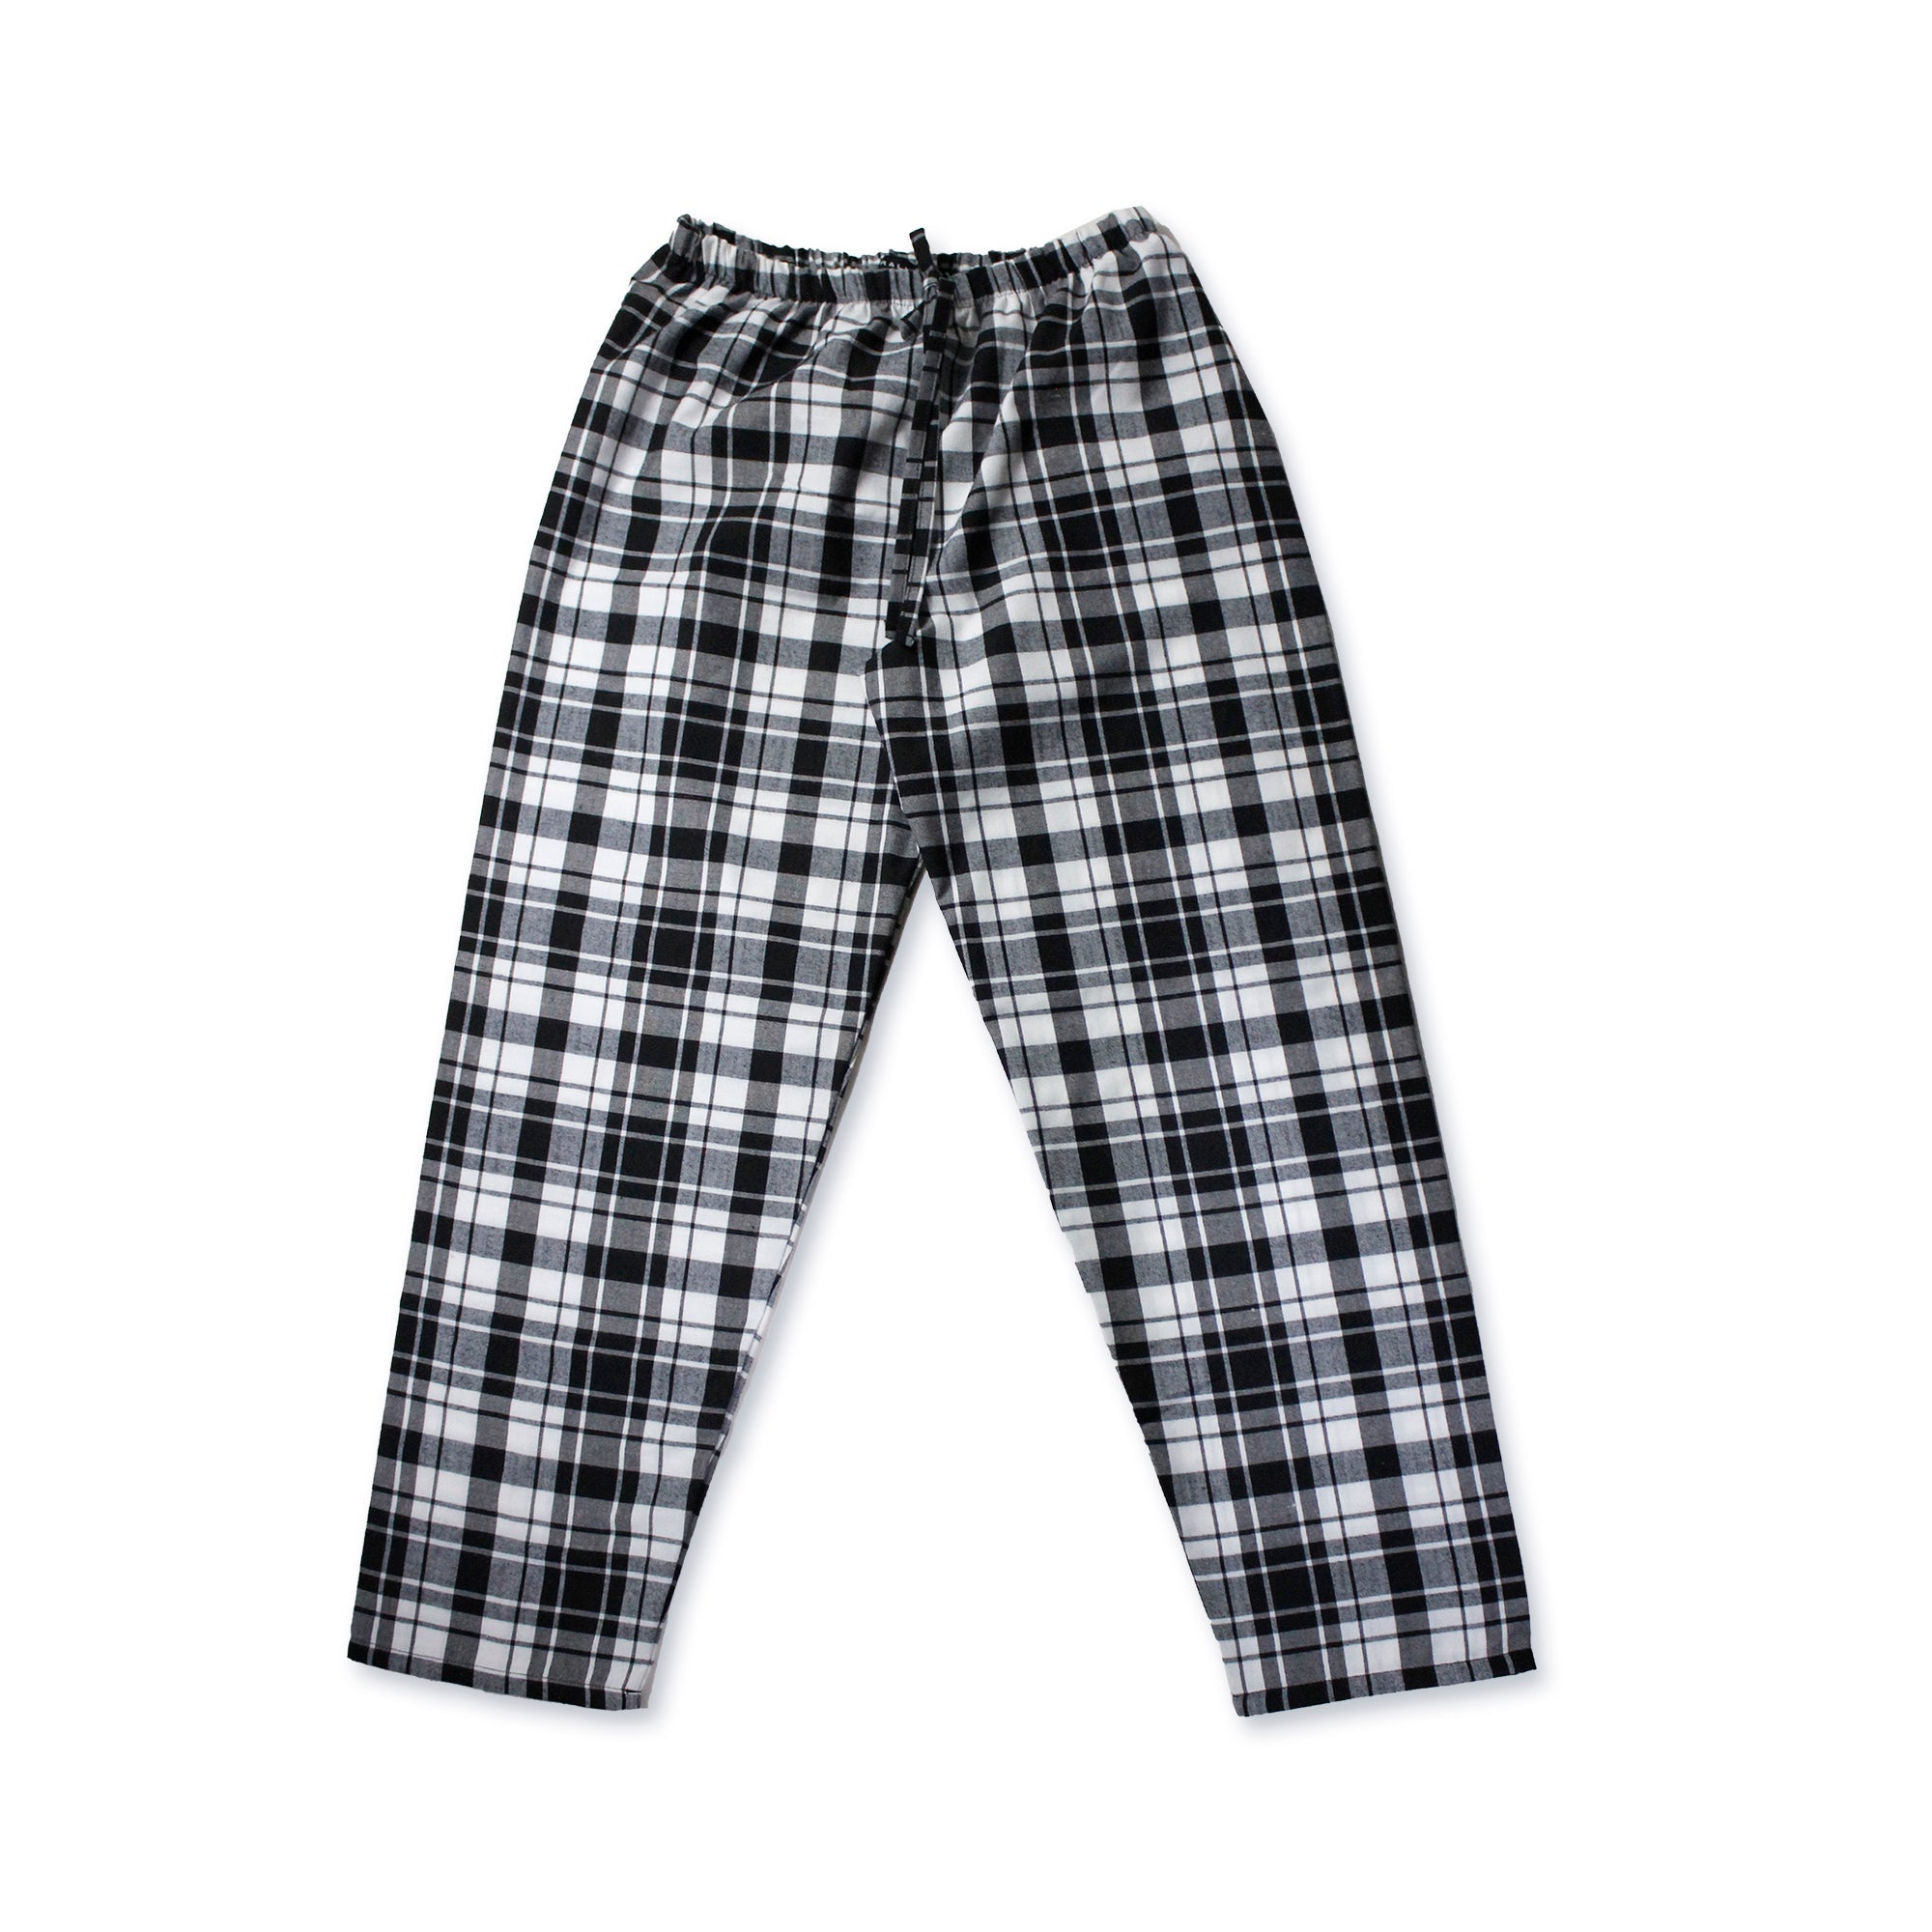 Pantalones Pijama Negro/Blanco Unisex Bebés 10013